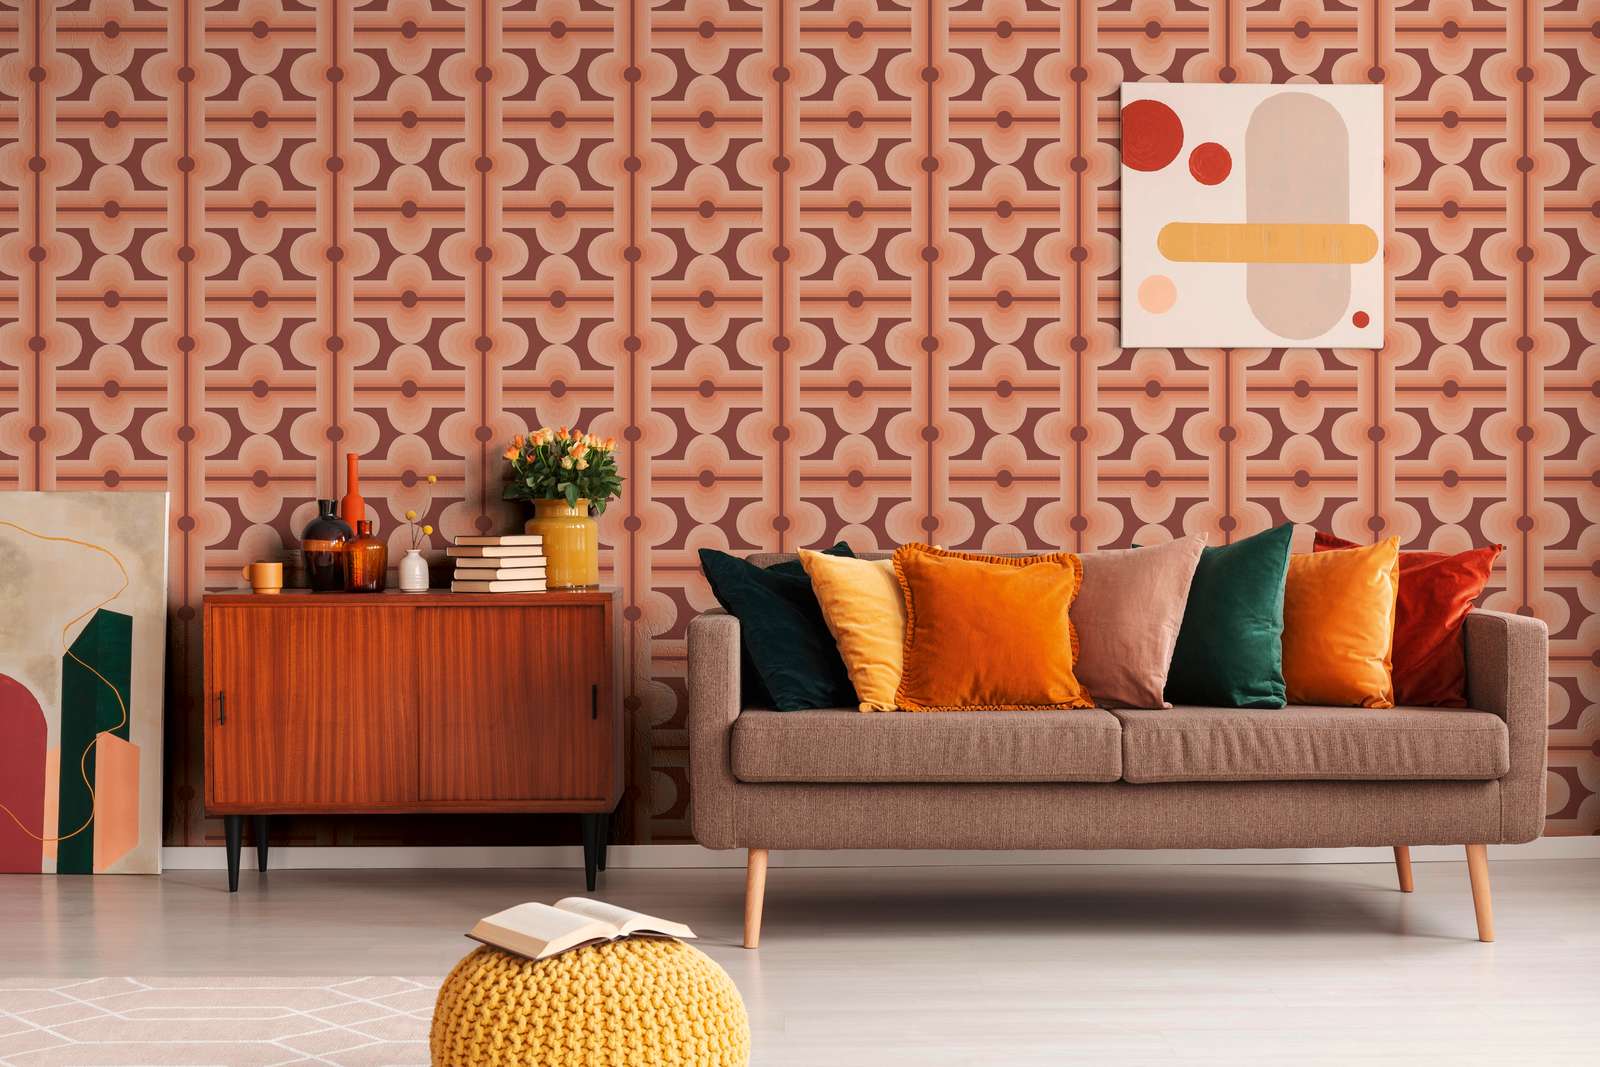             Vliesbehang met abstract patroon in retrostijl - rood, oranje
        